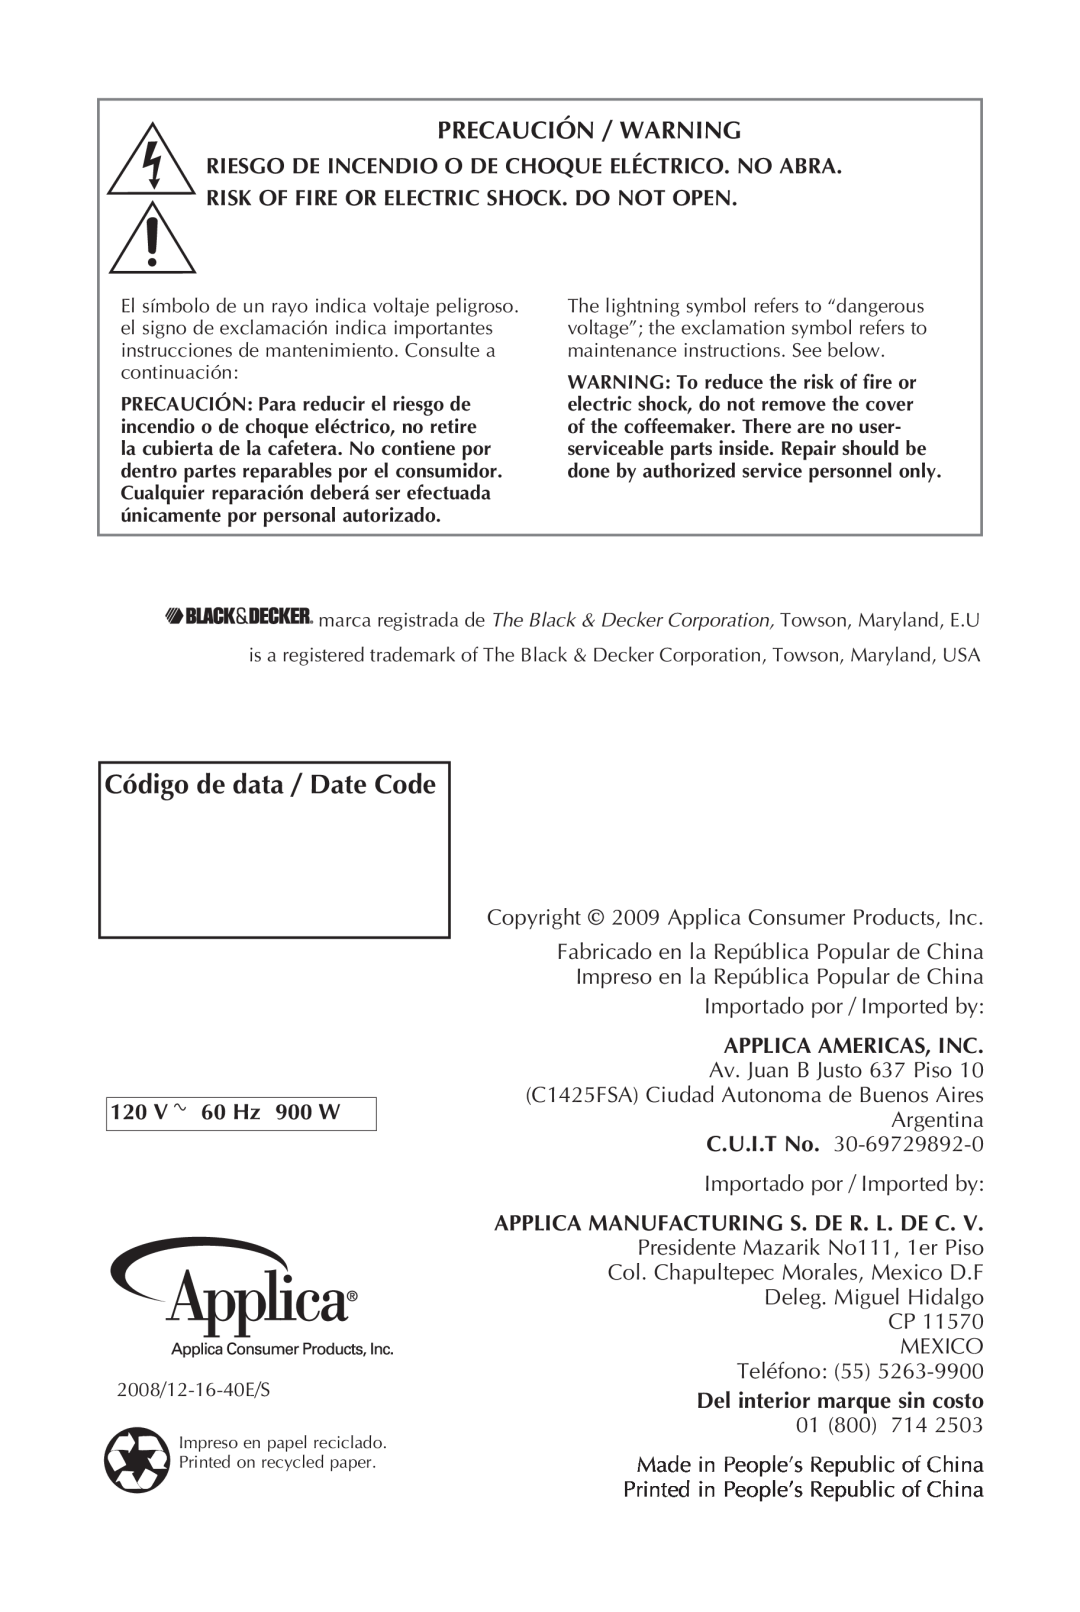 Black & Decker DCM111100W Código de data / Date Code, Precaución / Warning, Copyright 2009 Applica Consumer Products, Inc 